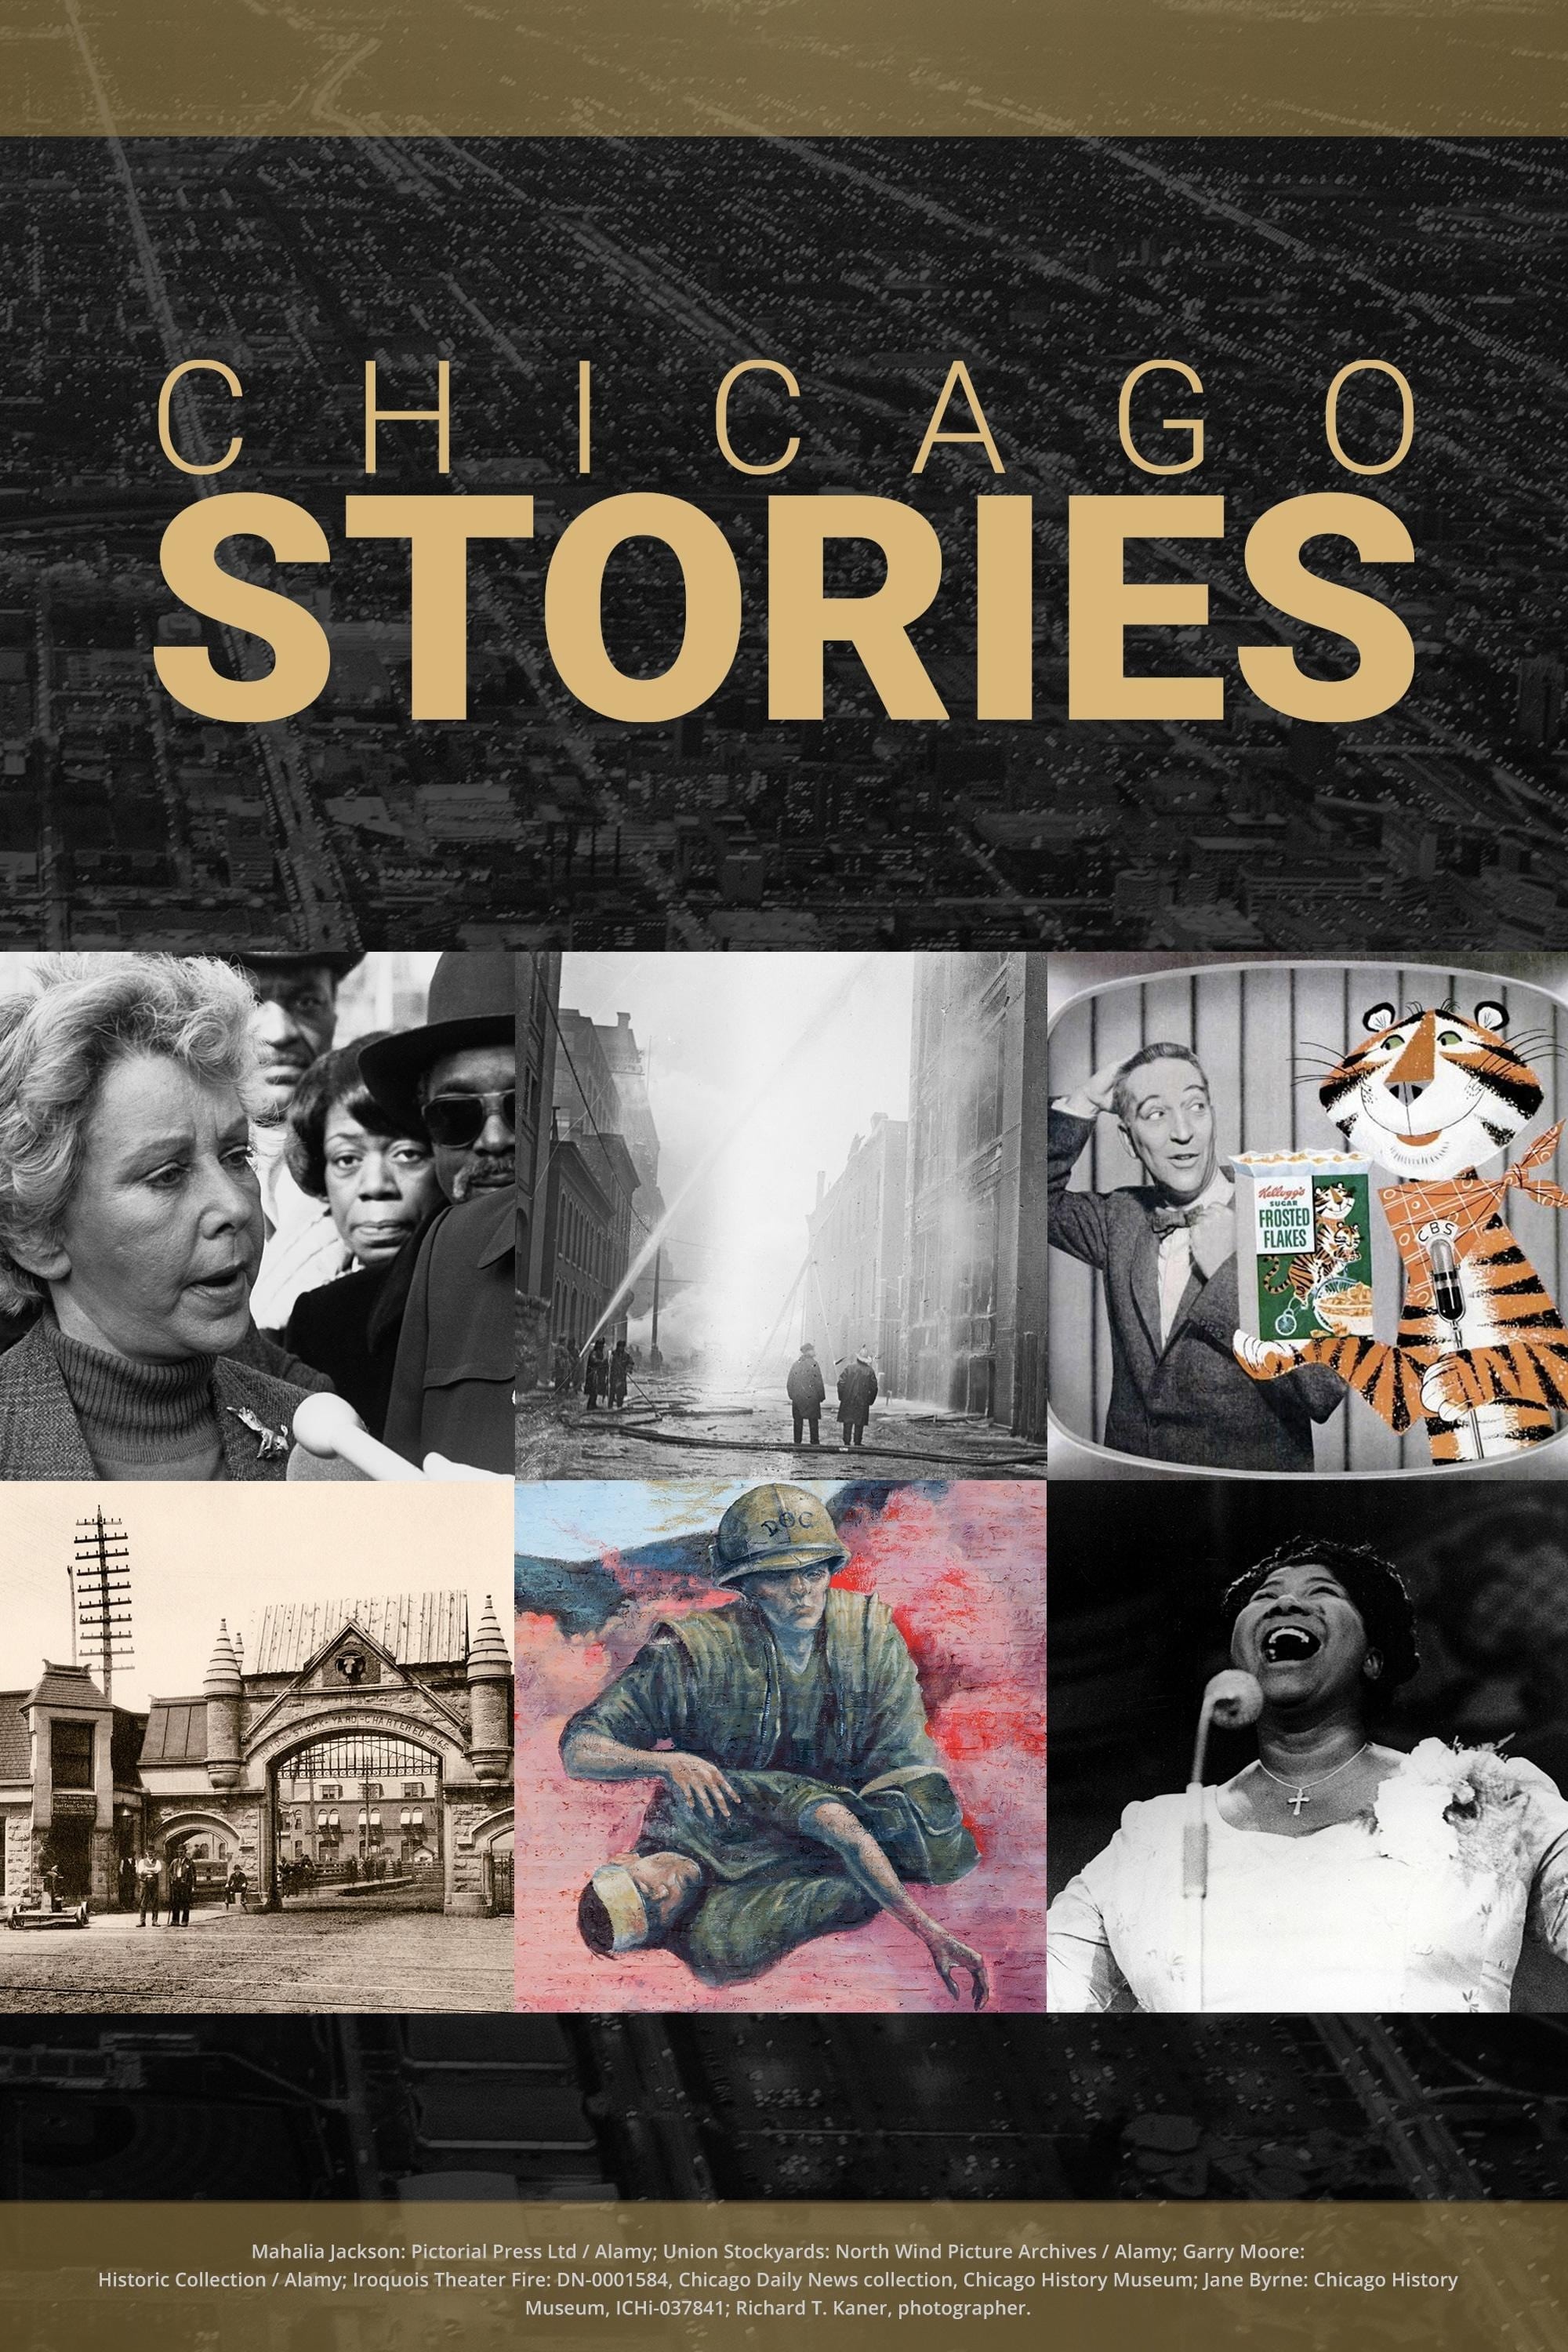 Chicago Stories: The Union Stockyards